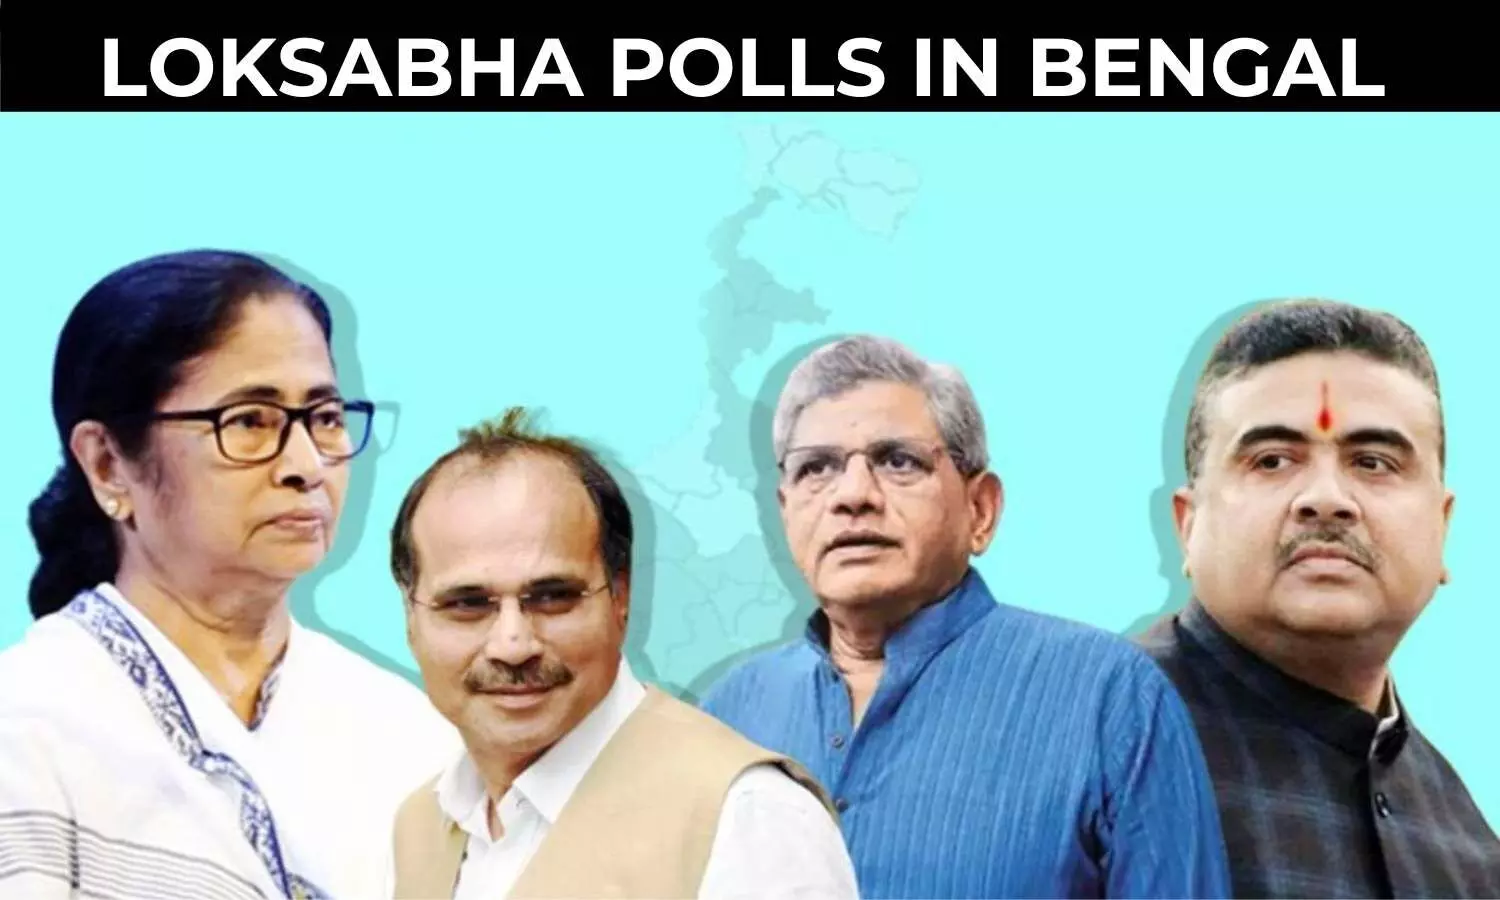 Allegations of violence emerge in Bengal during Lok Sabha Polls